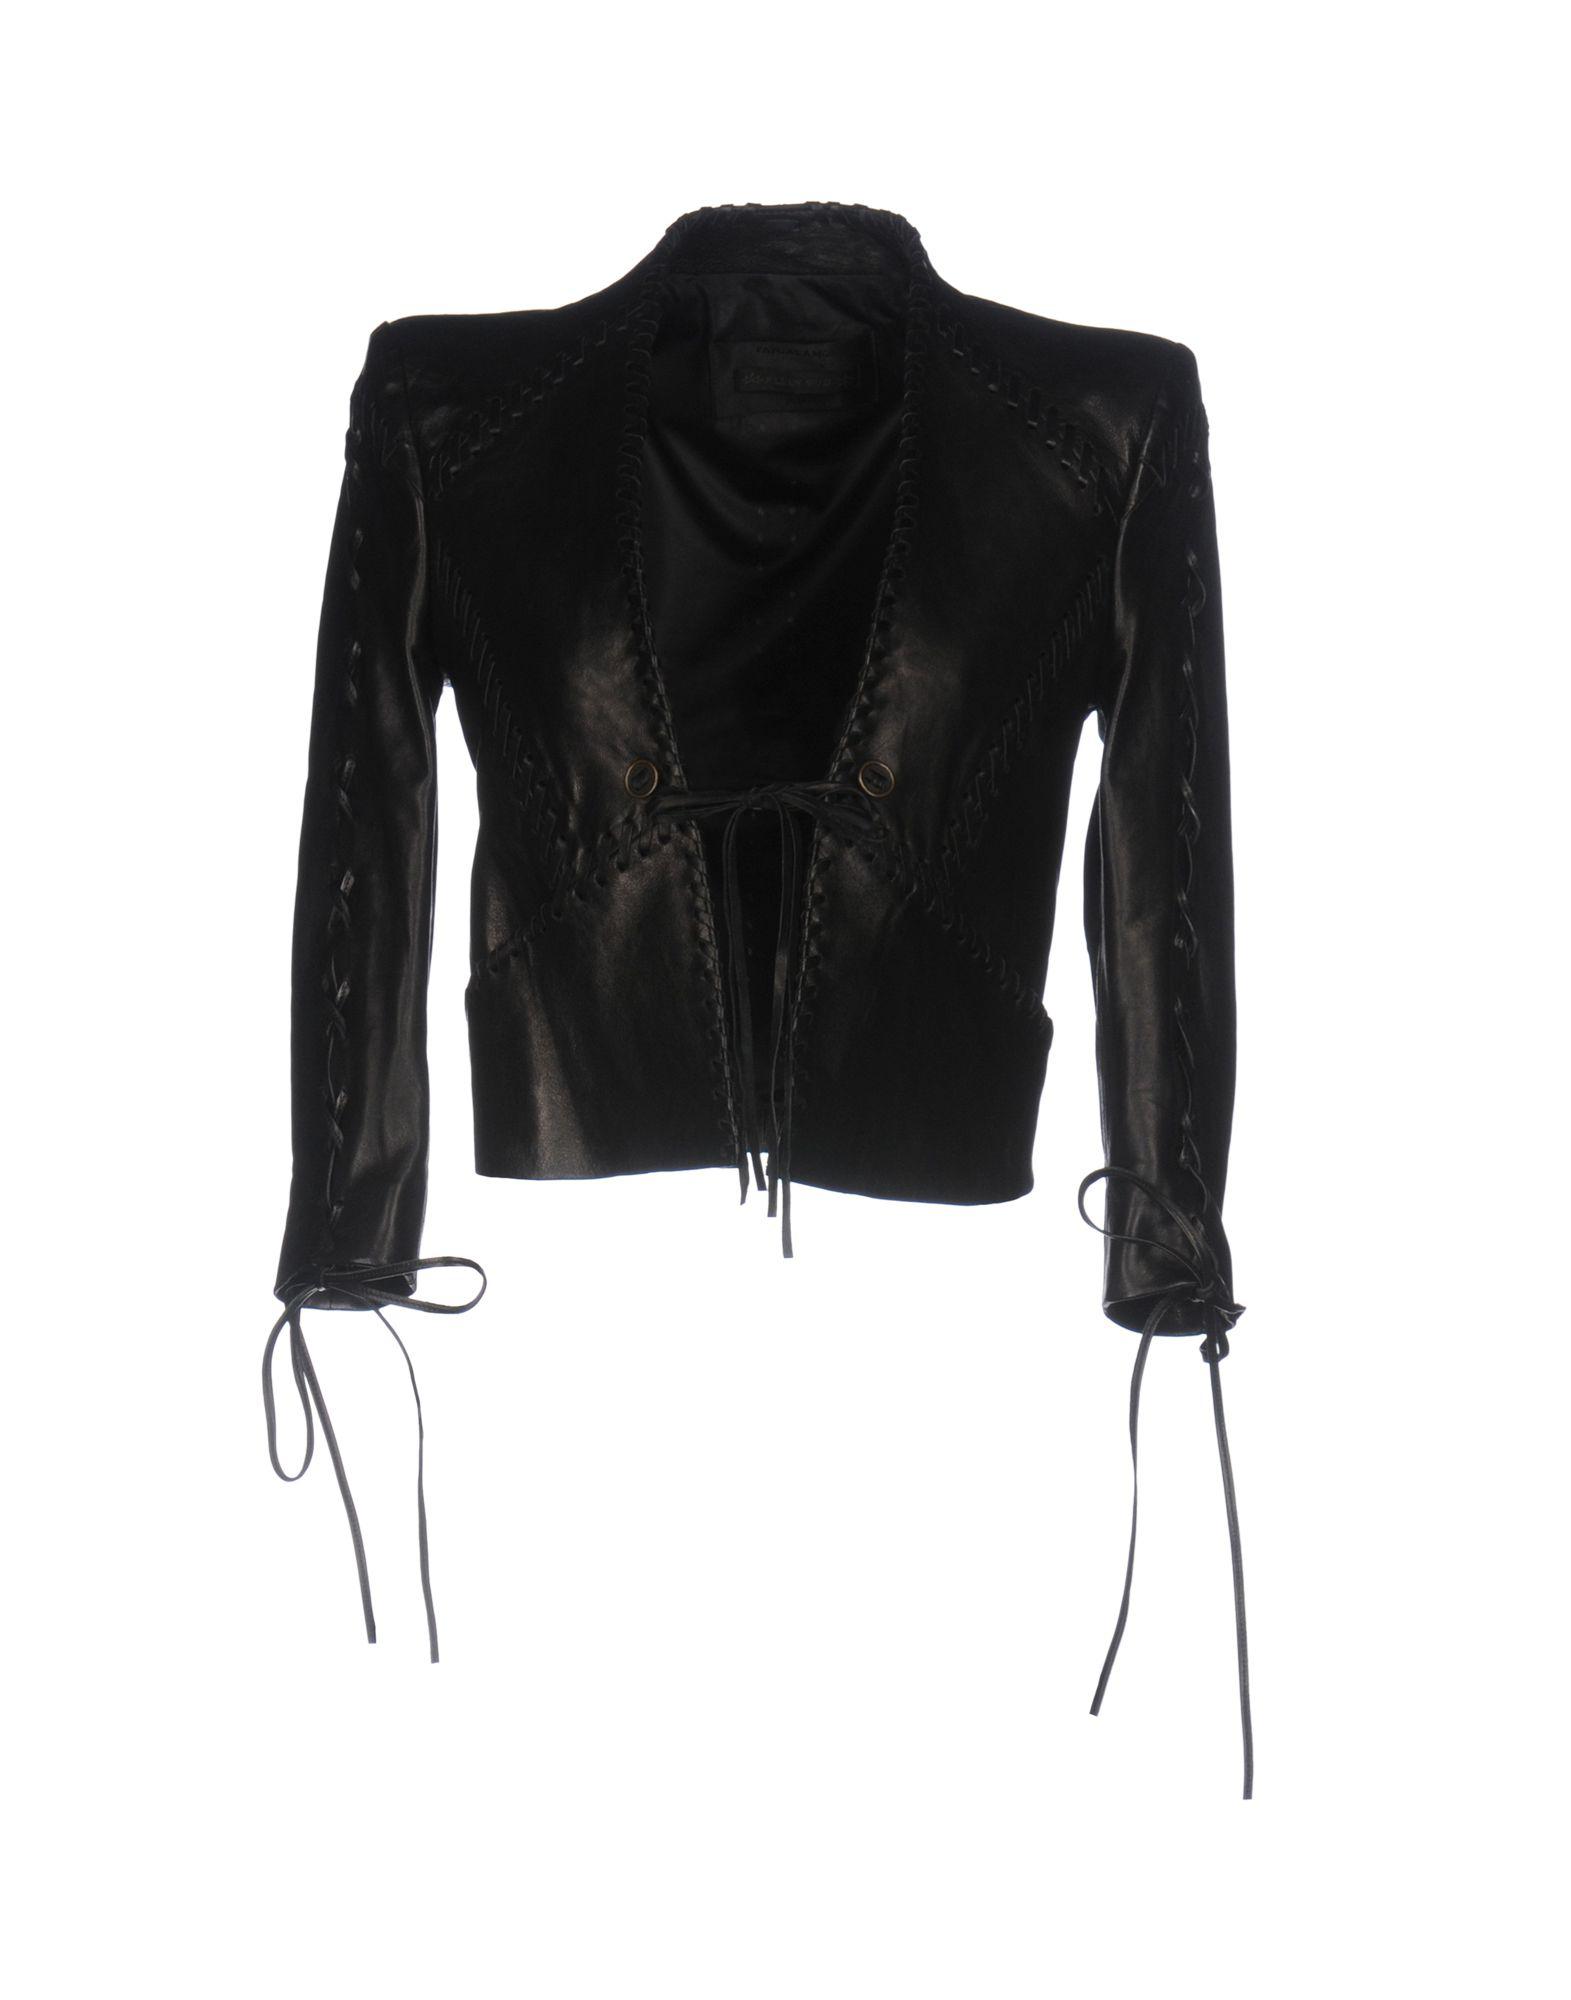 Plein Sud Leather Jacket in Black - Lyst